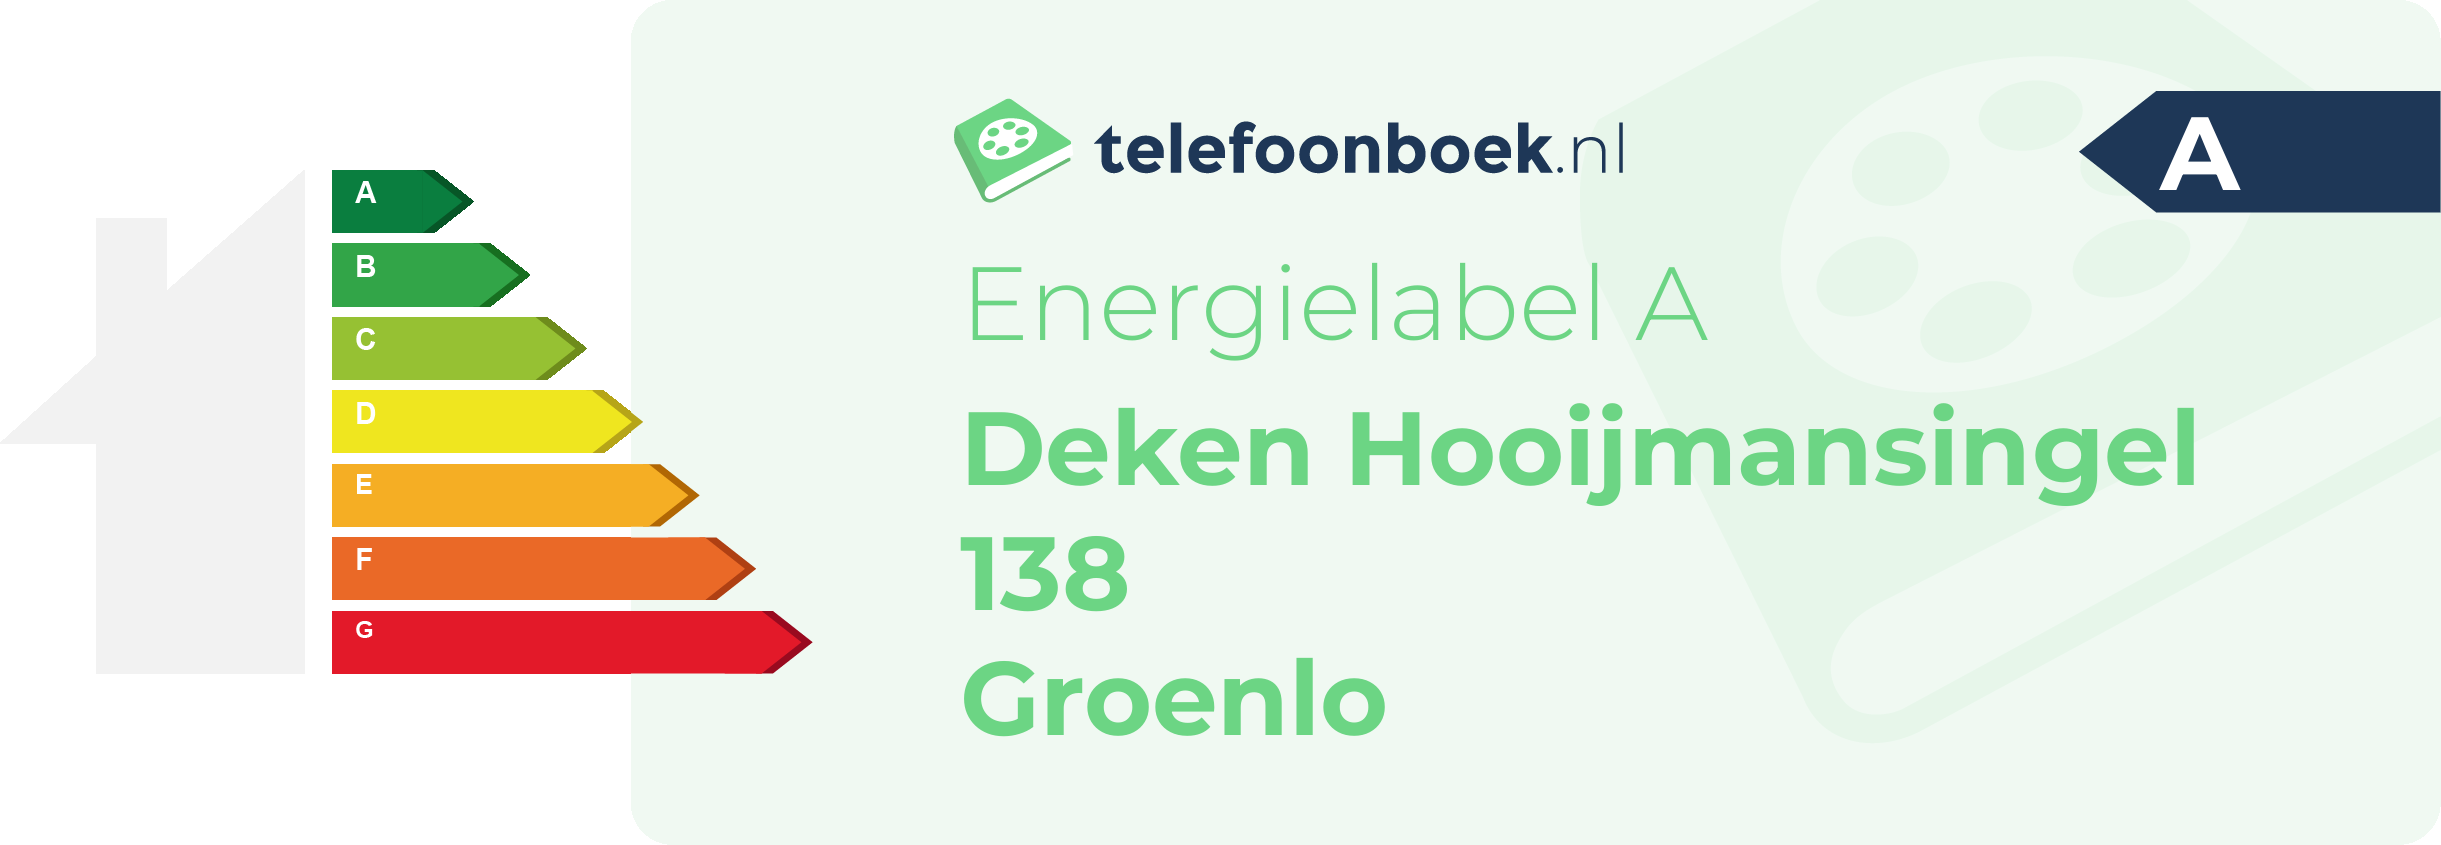 Energielabel Deken Hooijmansingel 138 Groenlo